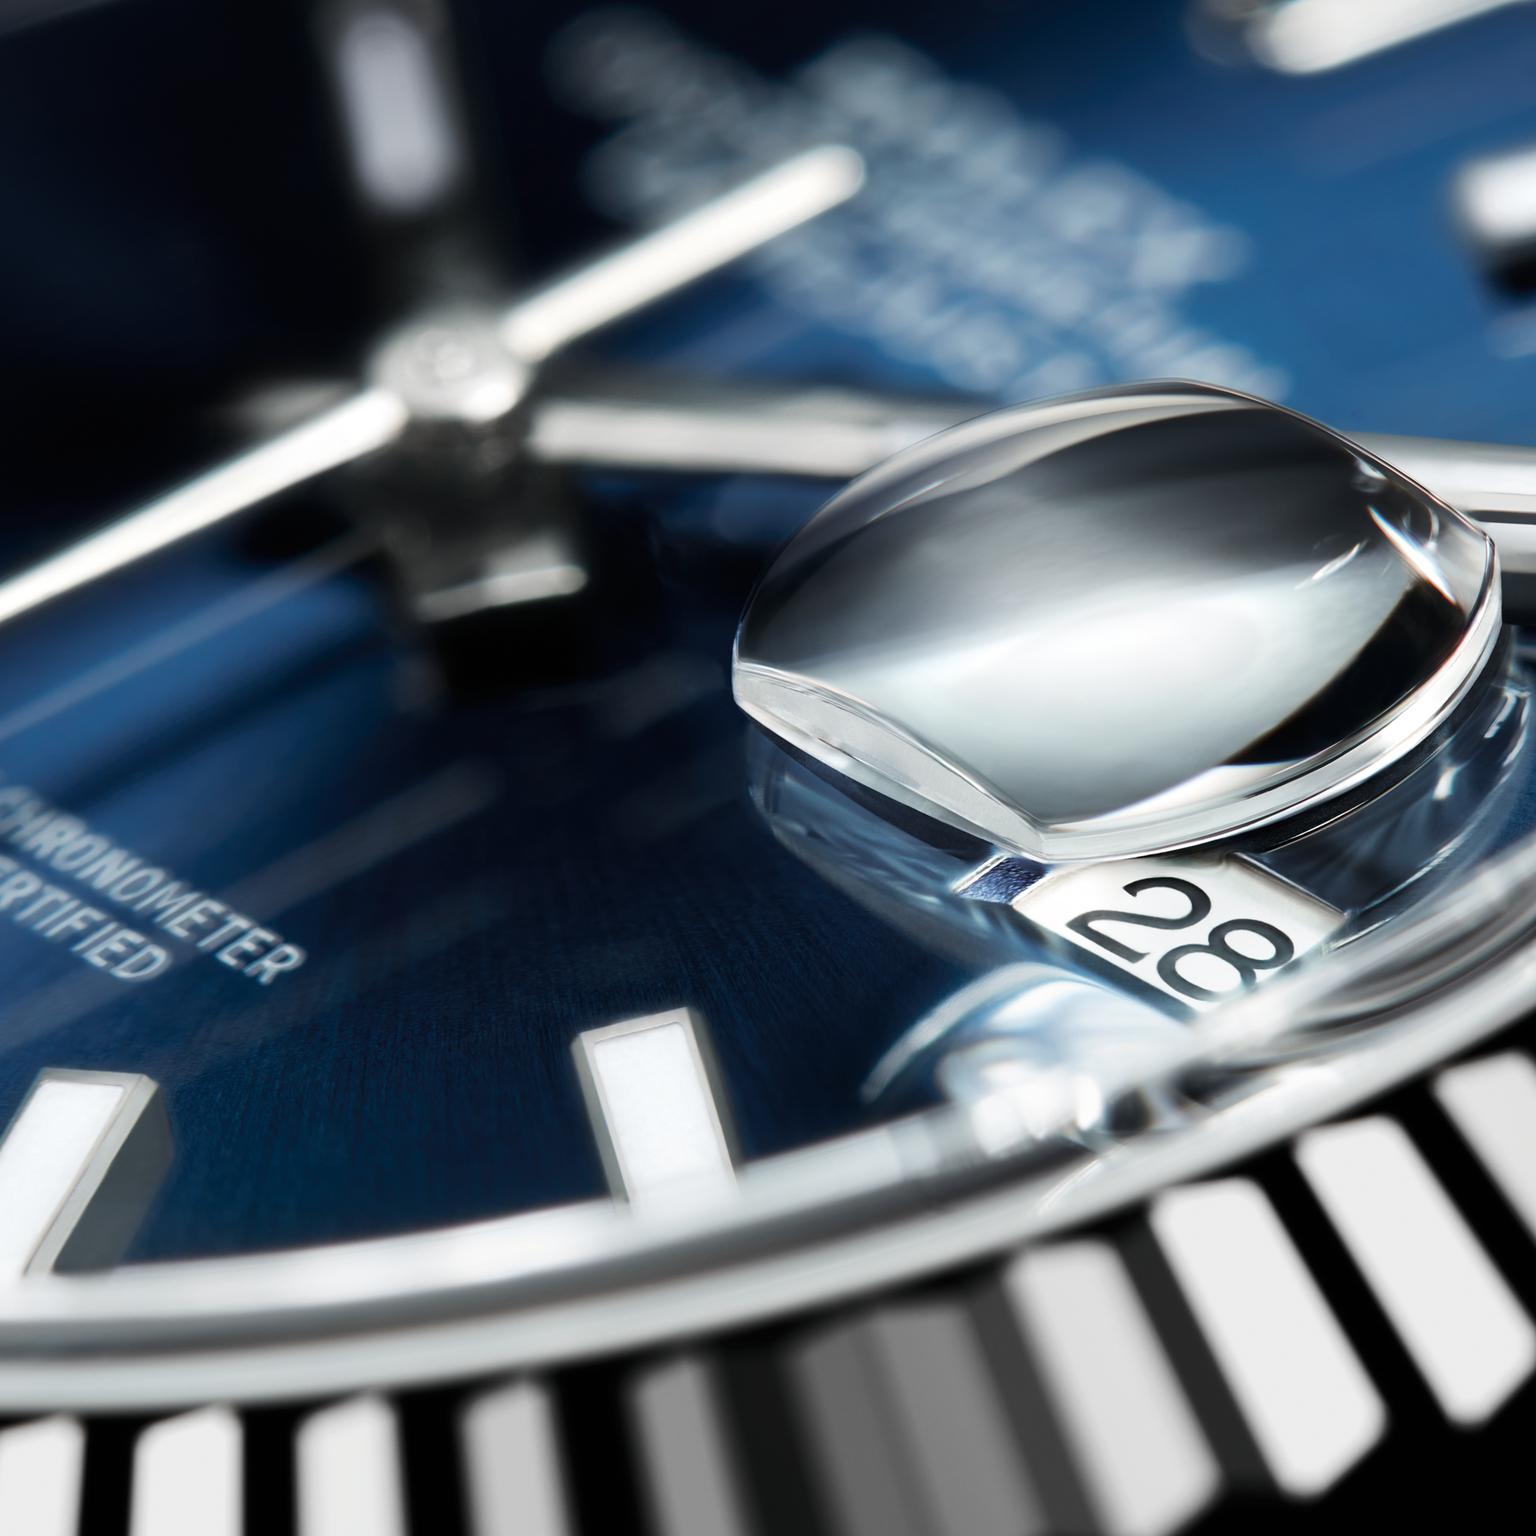 Rolex Datejust 41 watch in close up